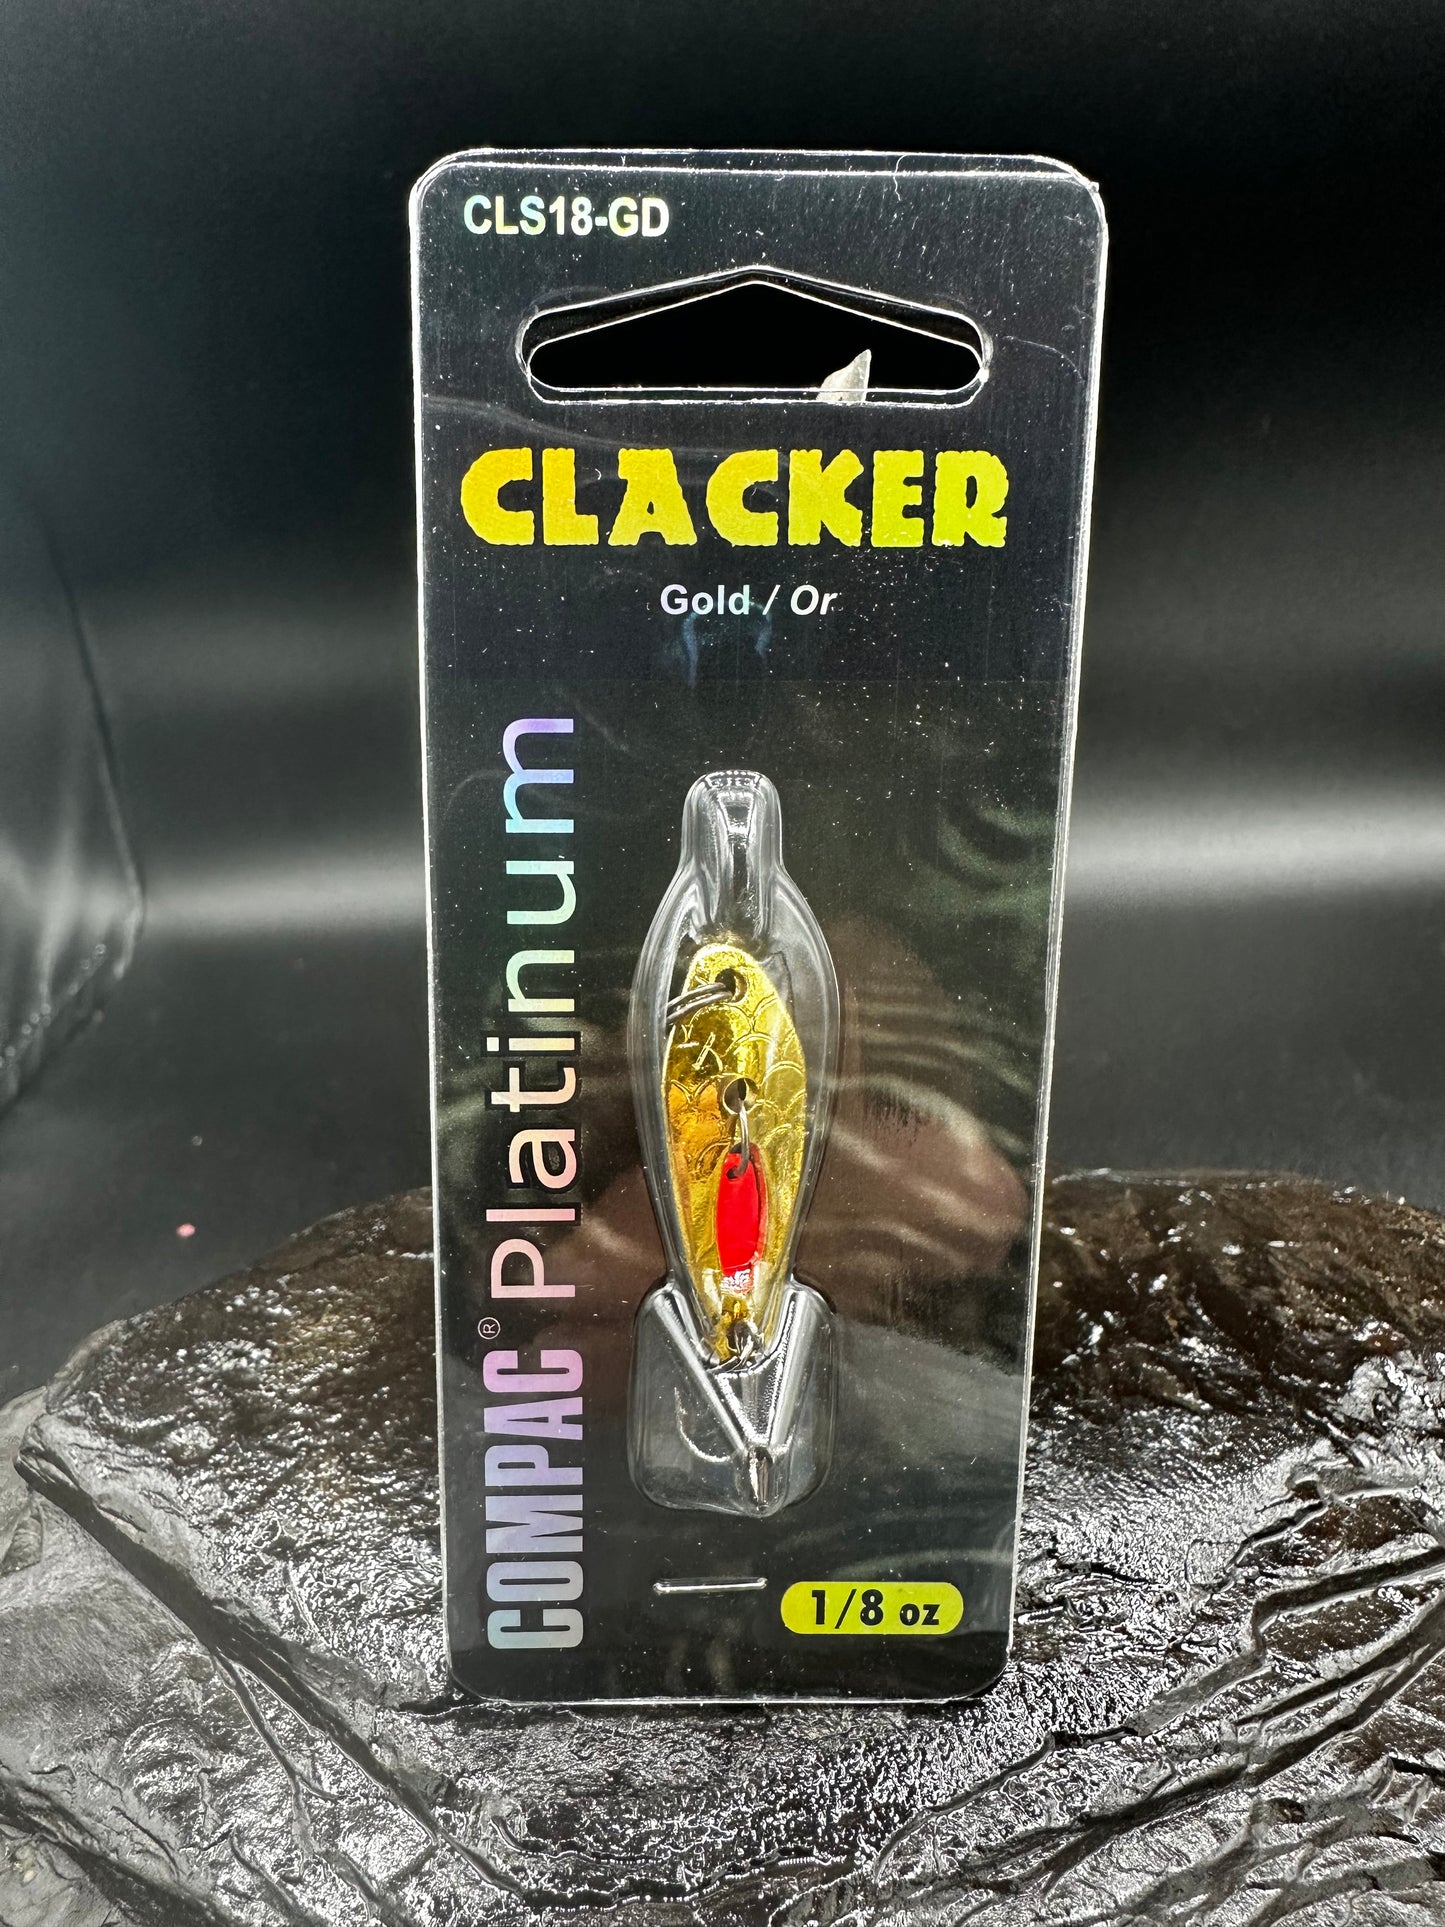 The Clacker Spoon